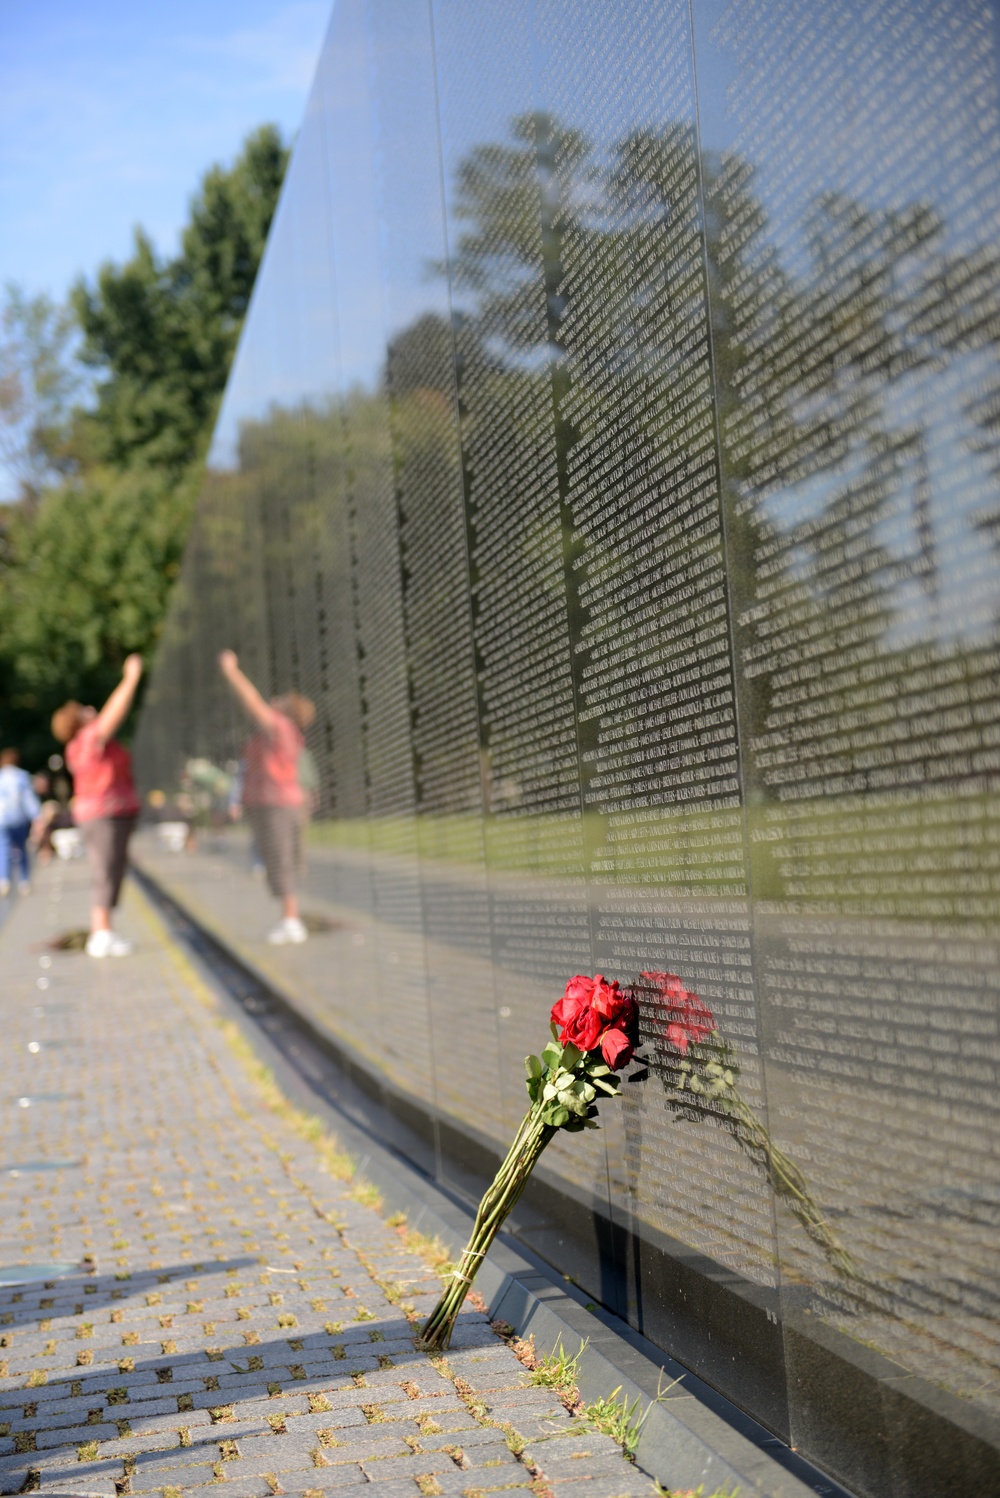 Vietnam Veterans Memorial in Washington